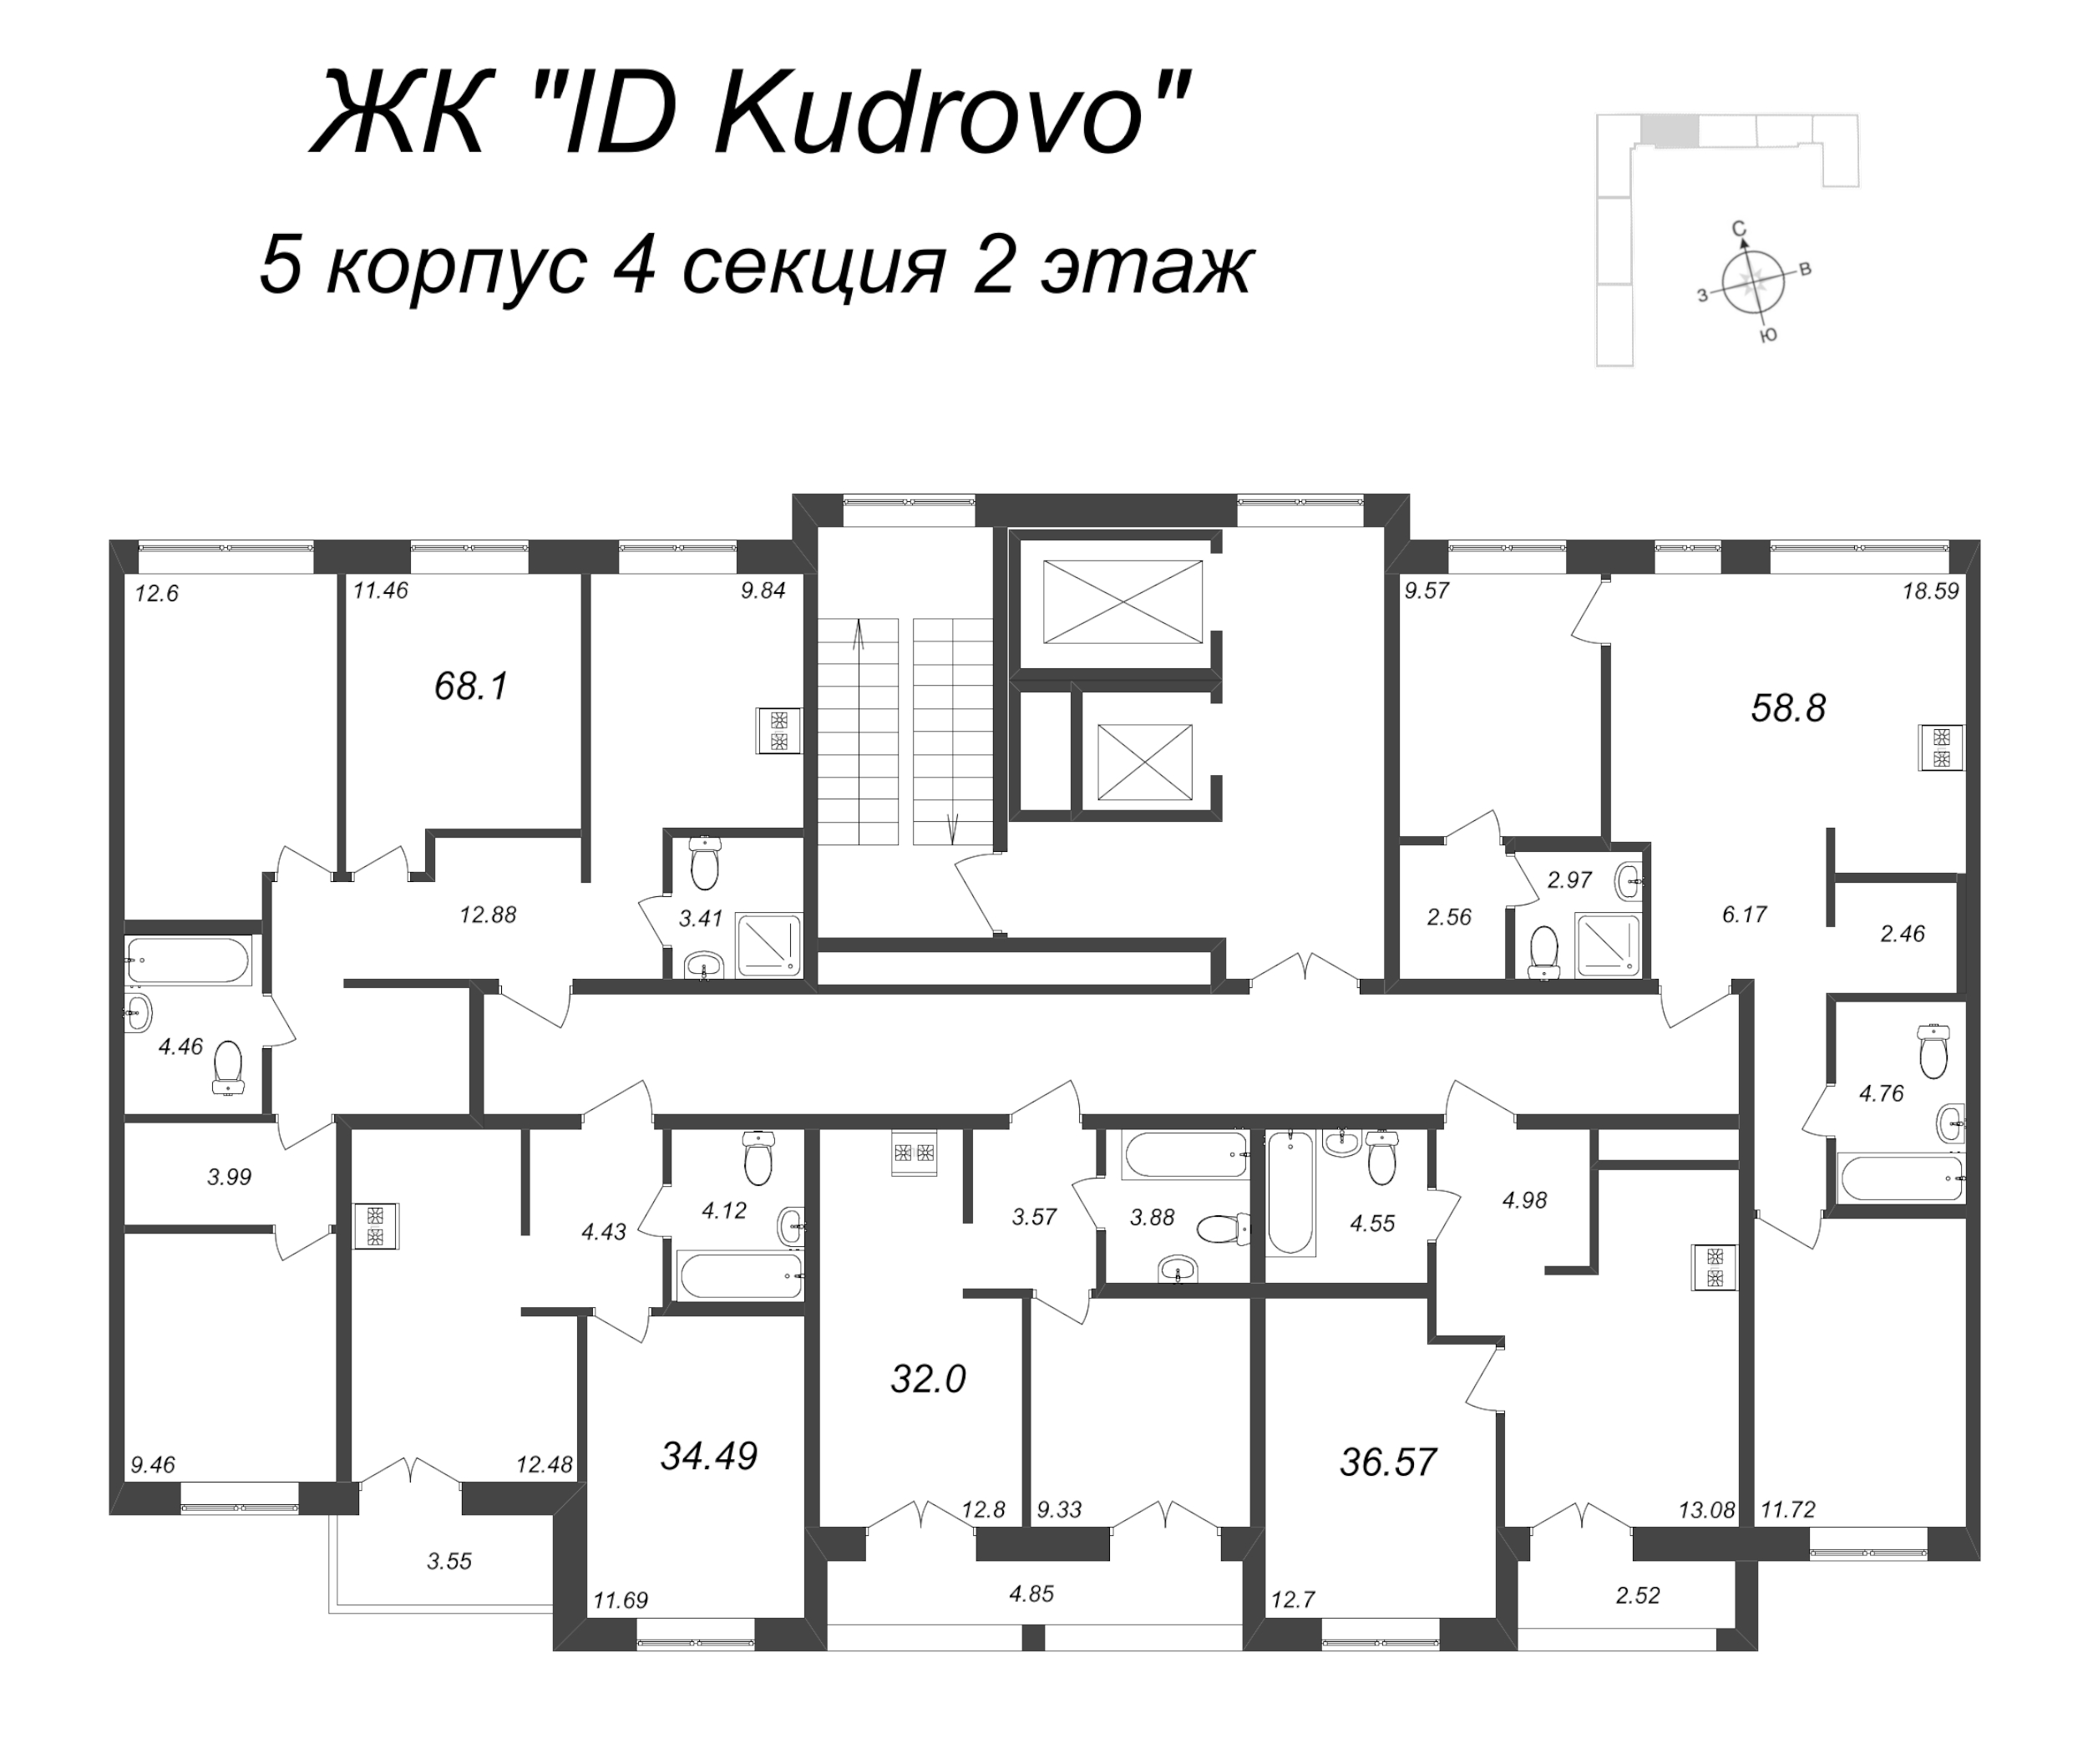 3-комнатная квартира, 68.1 м² в ЖК "ID Kudrovo" - планировка этажа